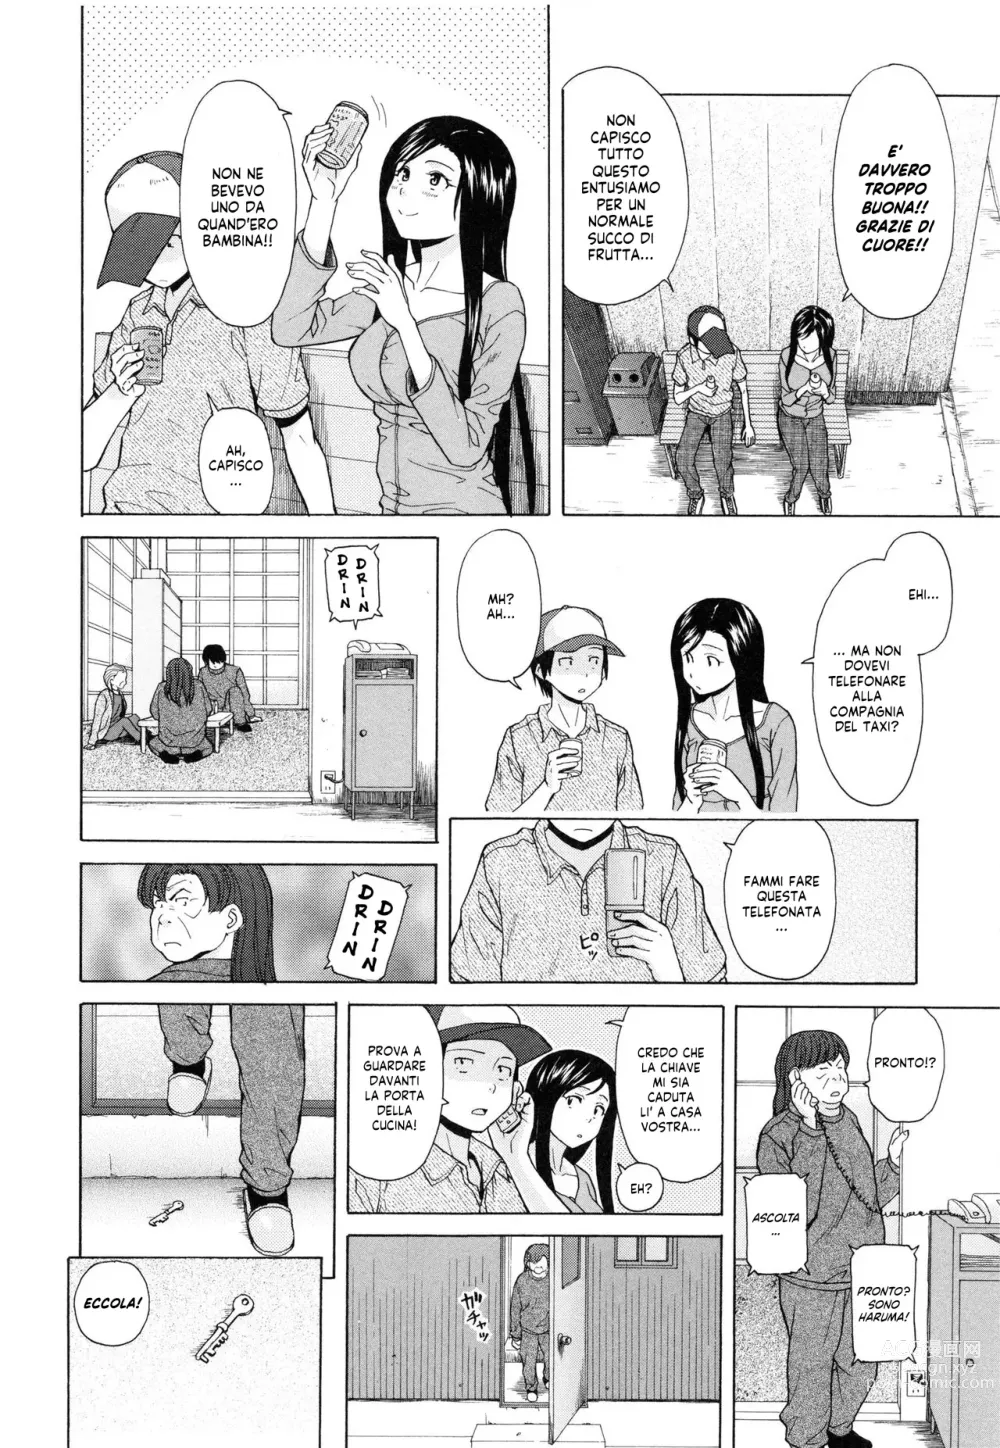 Page 238 of manga Cugine e Cognate...